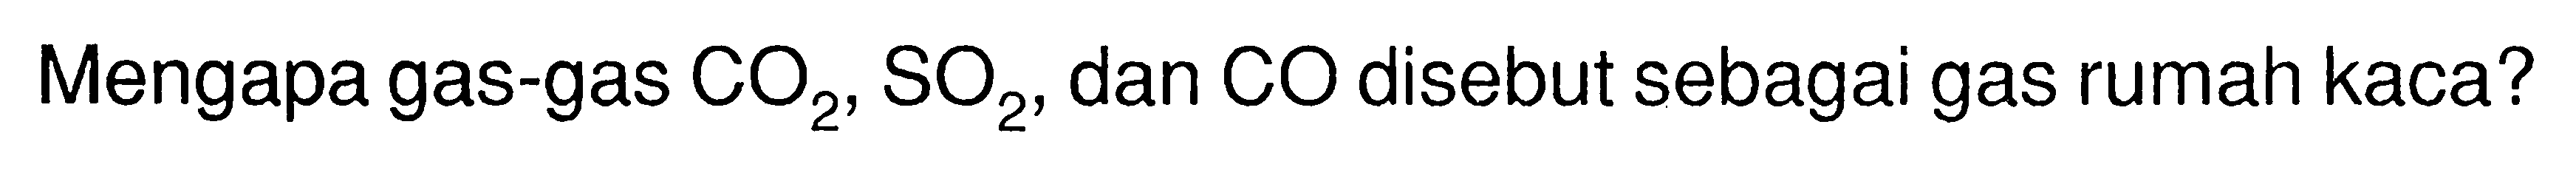 Mengapa gas-gas CO2, SO2, dan CO disebut sebagai gas rumah kaca?